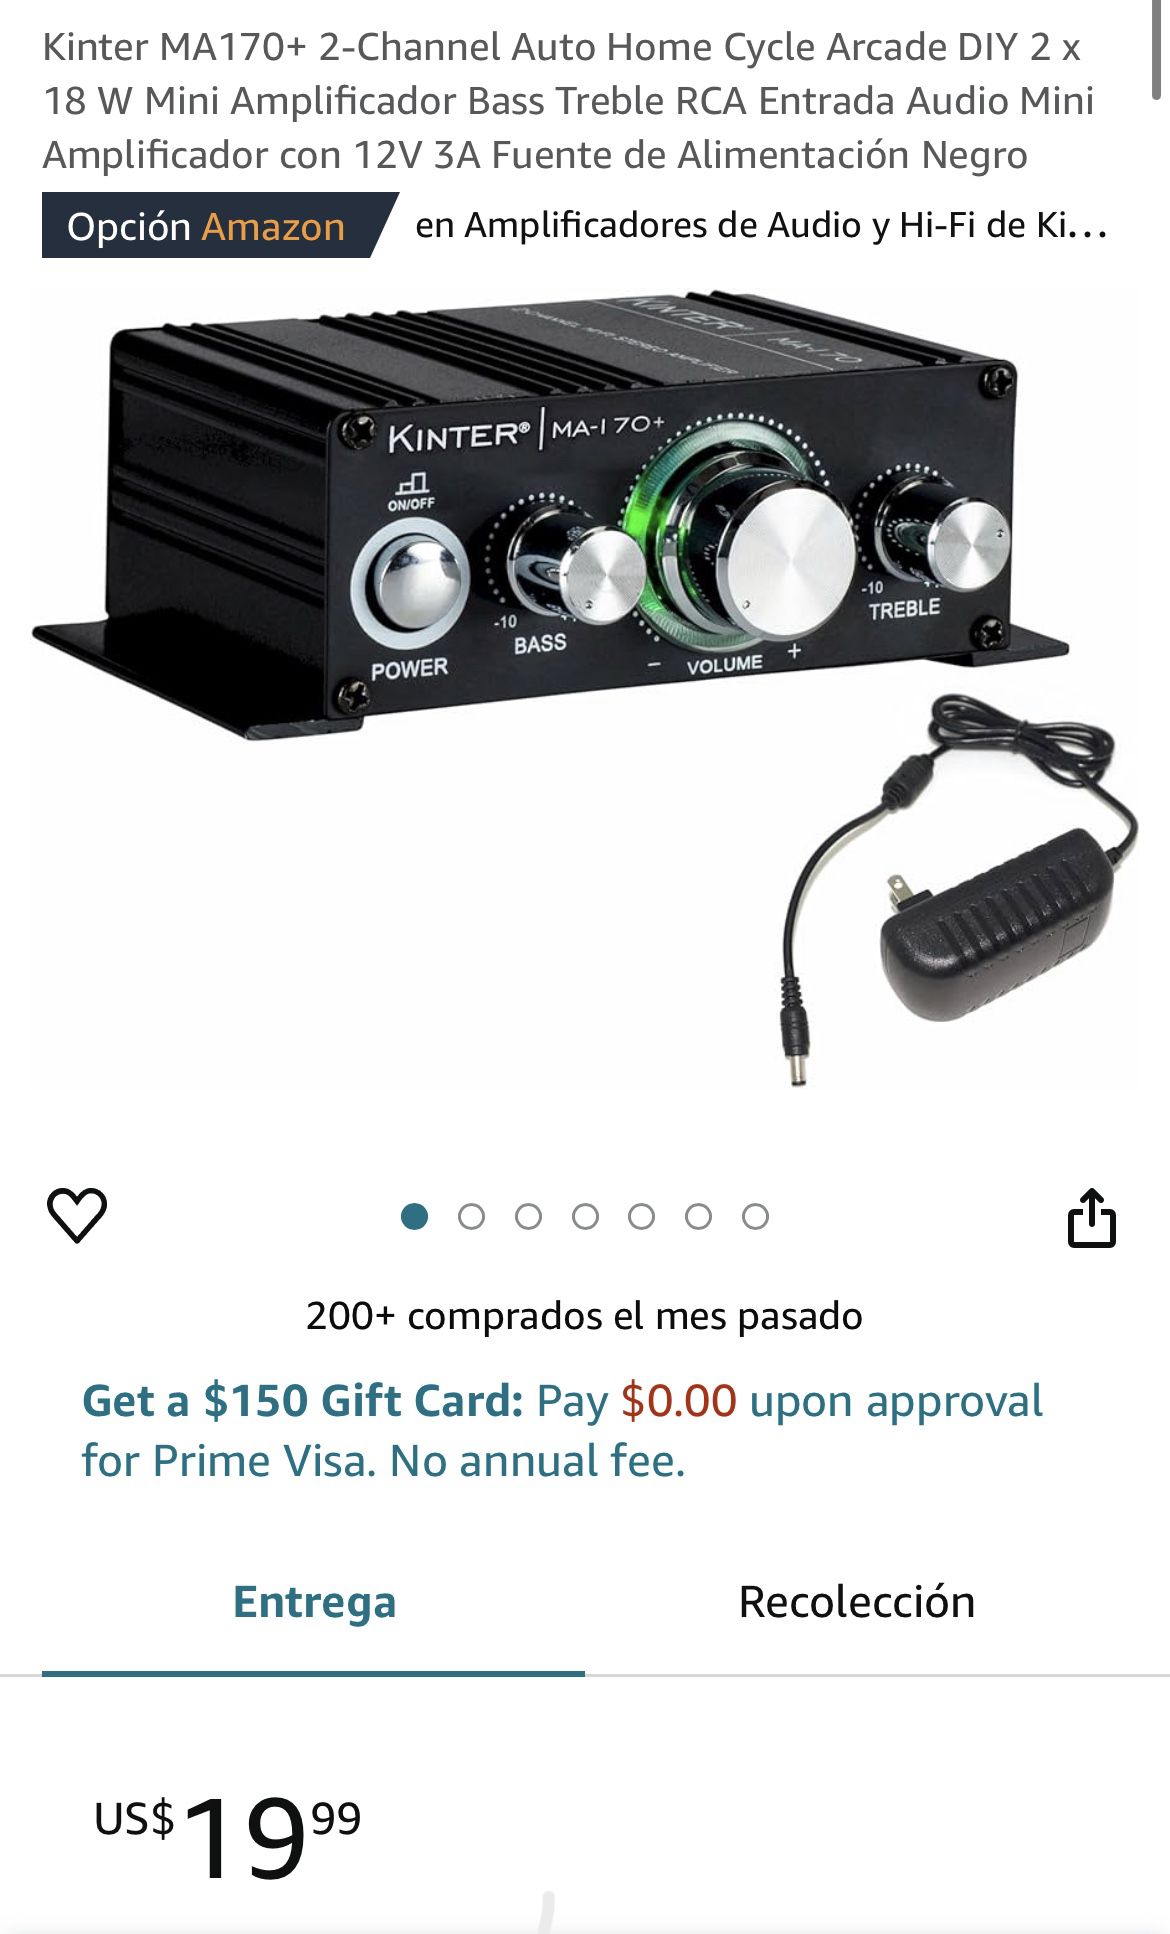 Kinter Mini Amplificador 